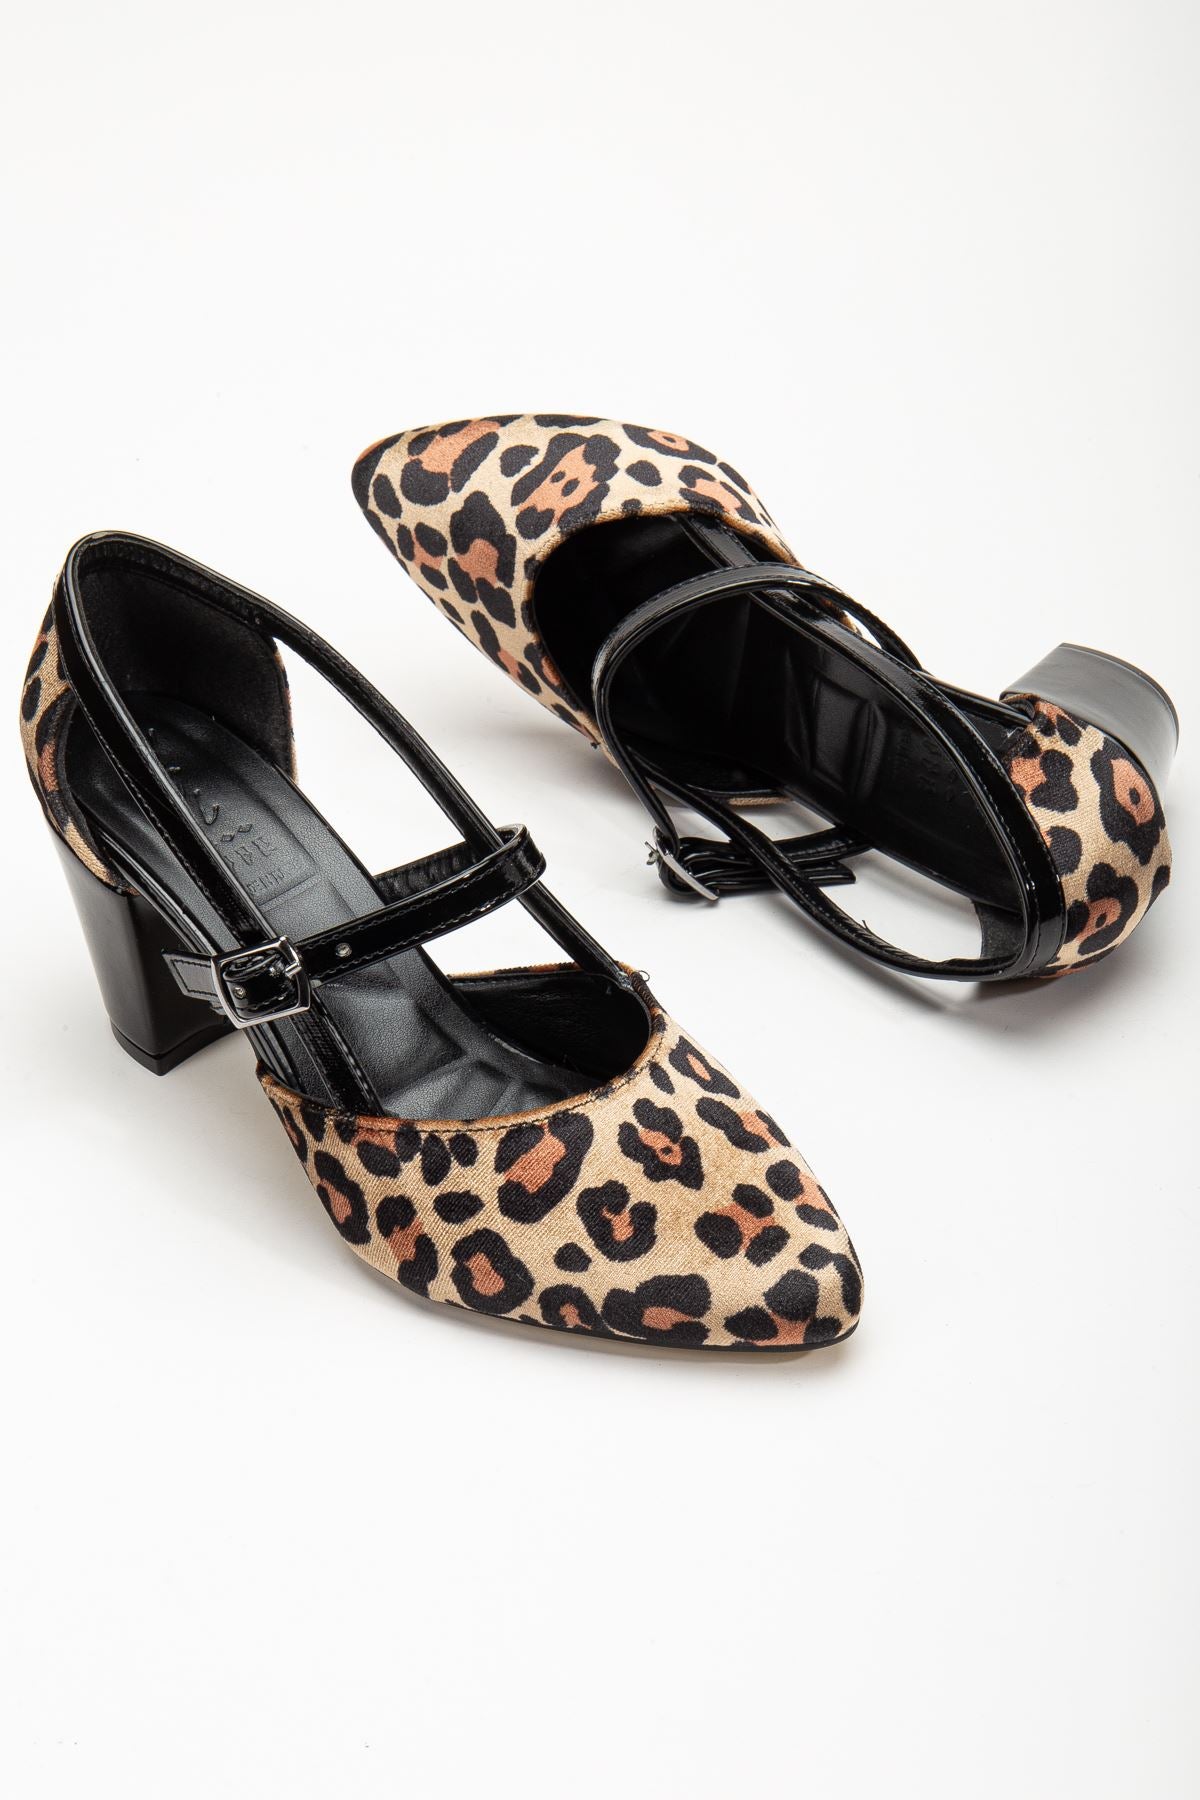 Maricis Black - Leopard Crocodile Detailed Heeled Women's Shoes - STREETMODE ™